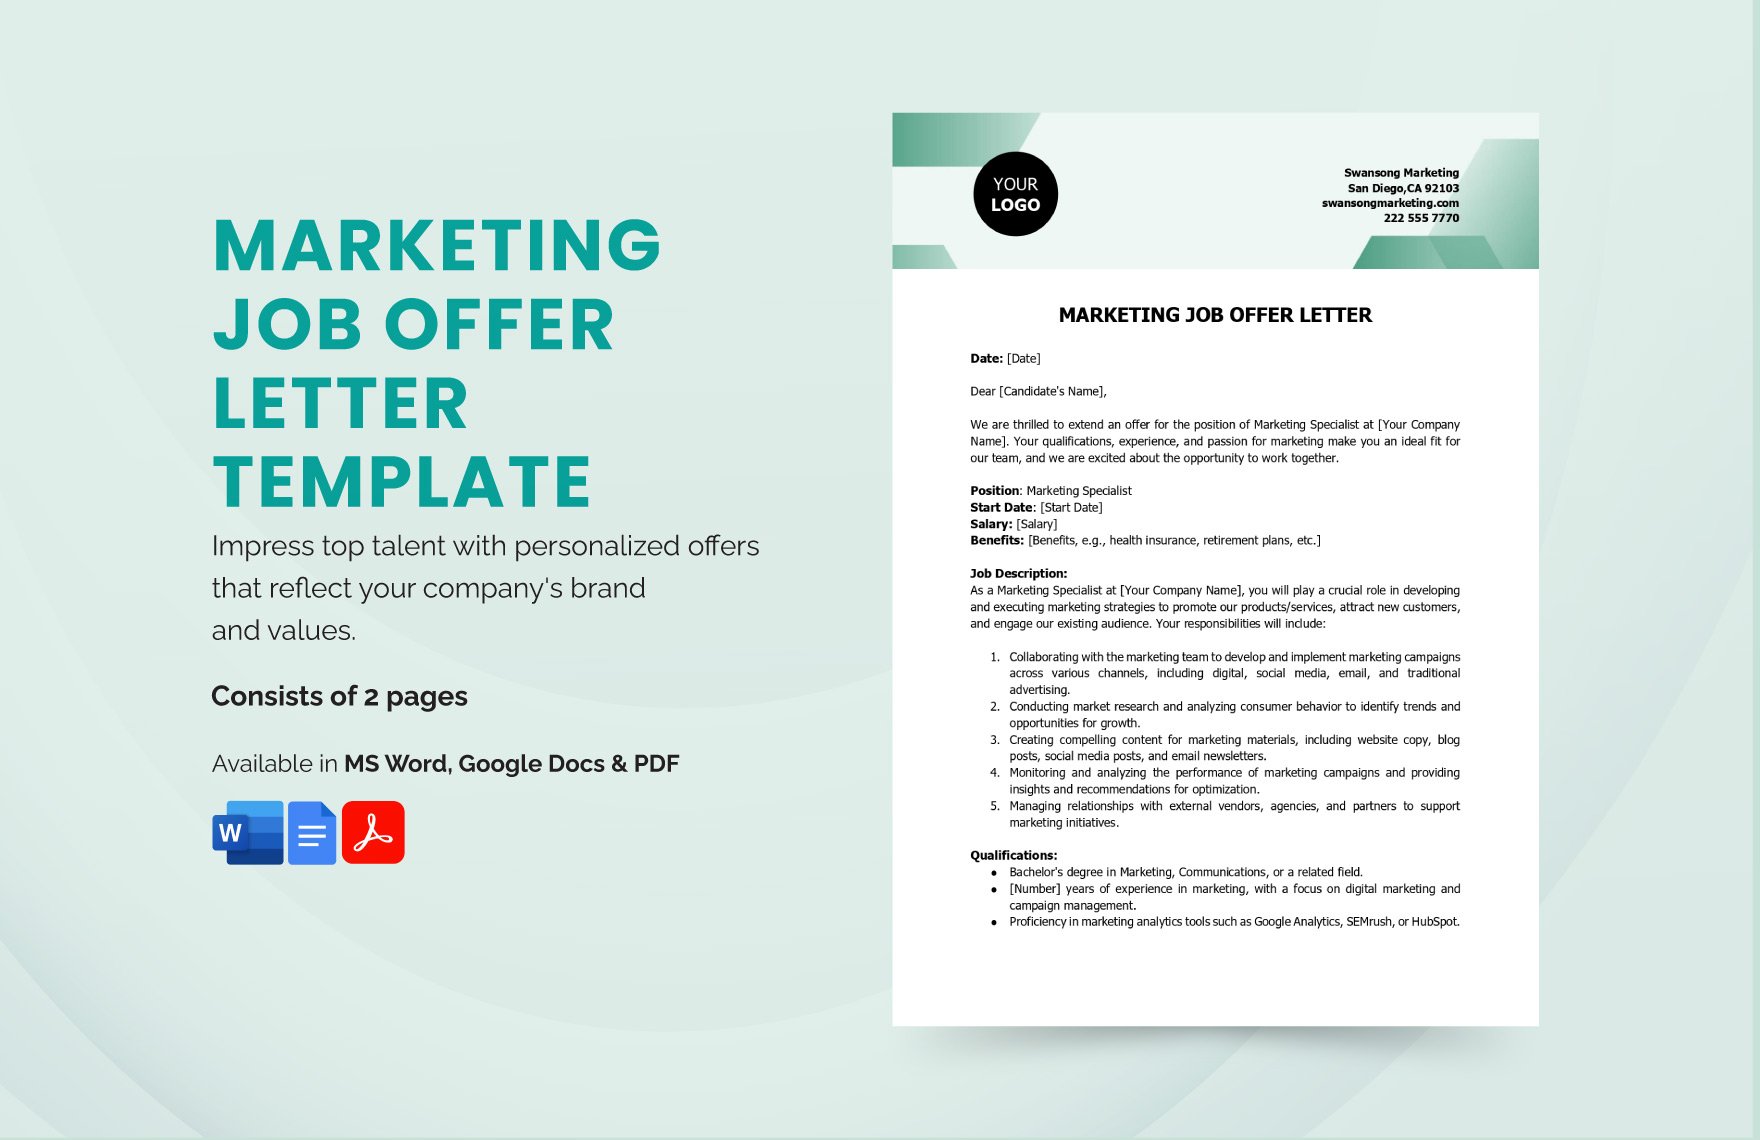 Marketing Job Offer Letter Template in Word, Google Docs, PDF